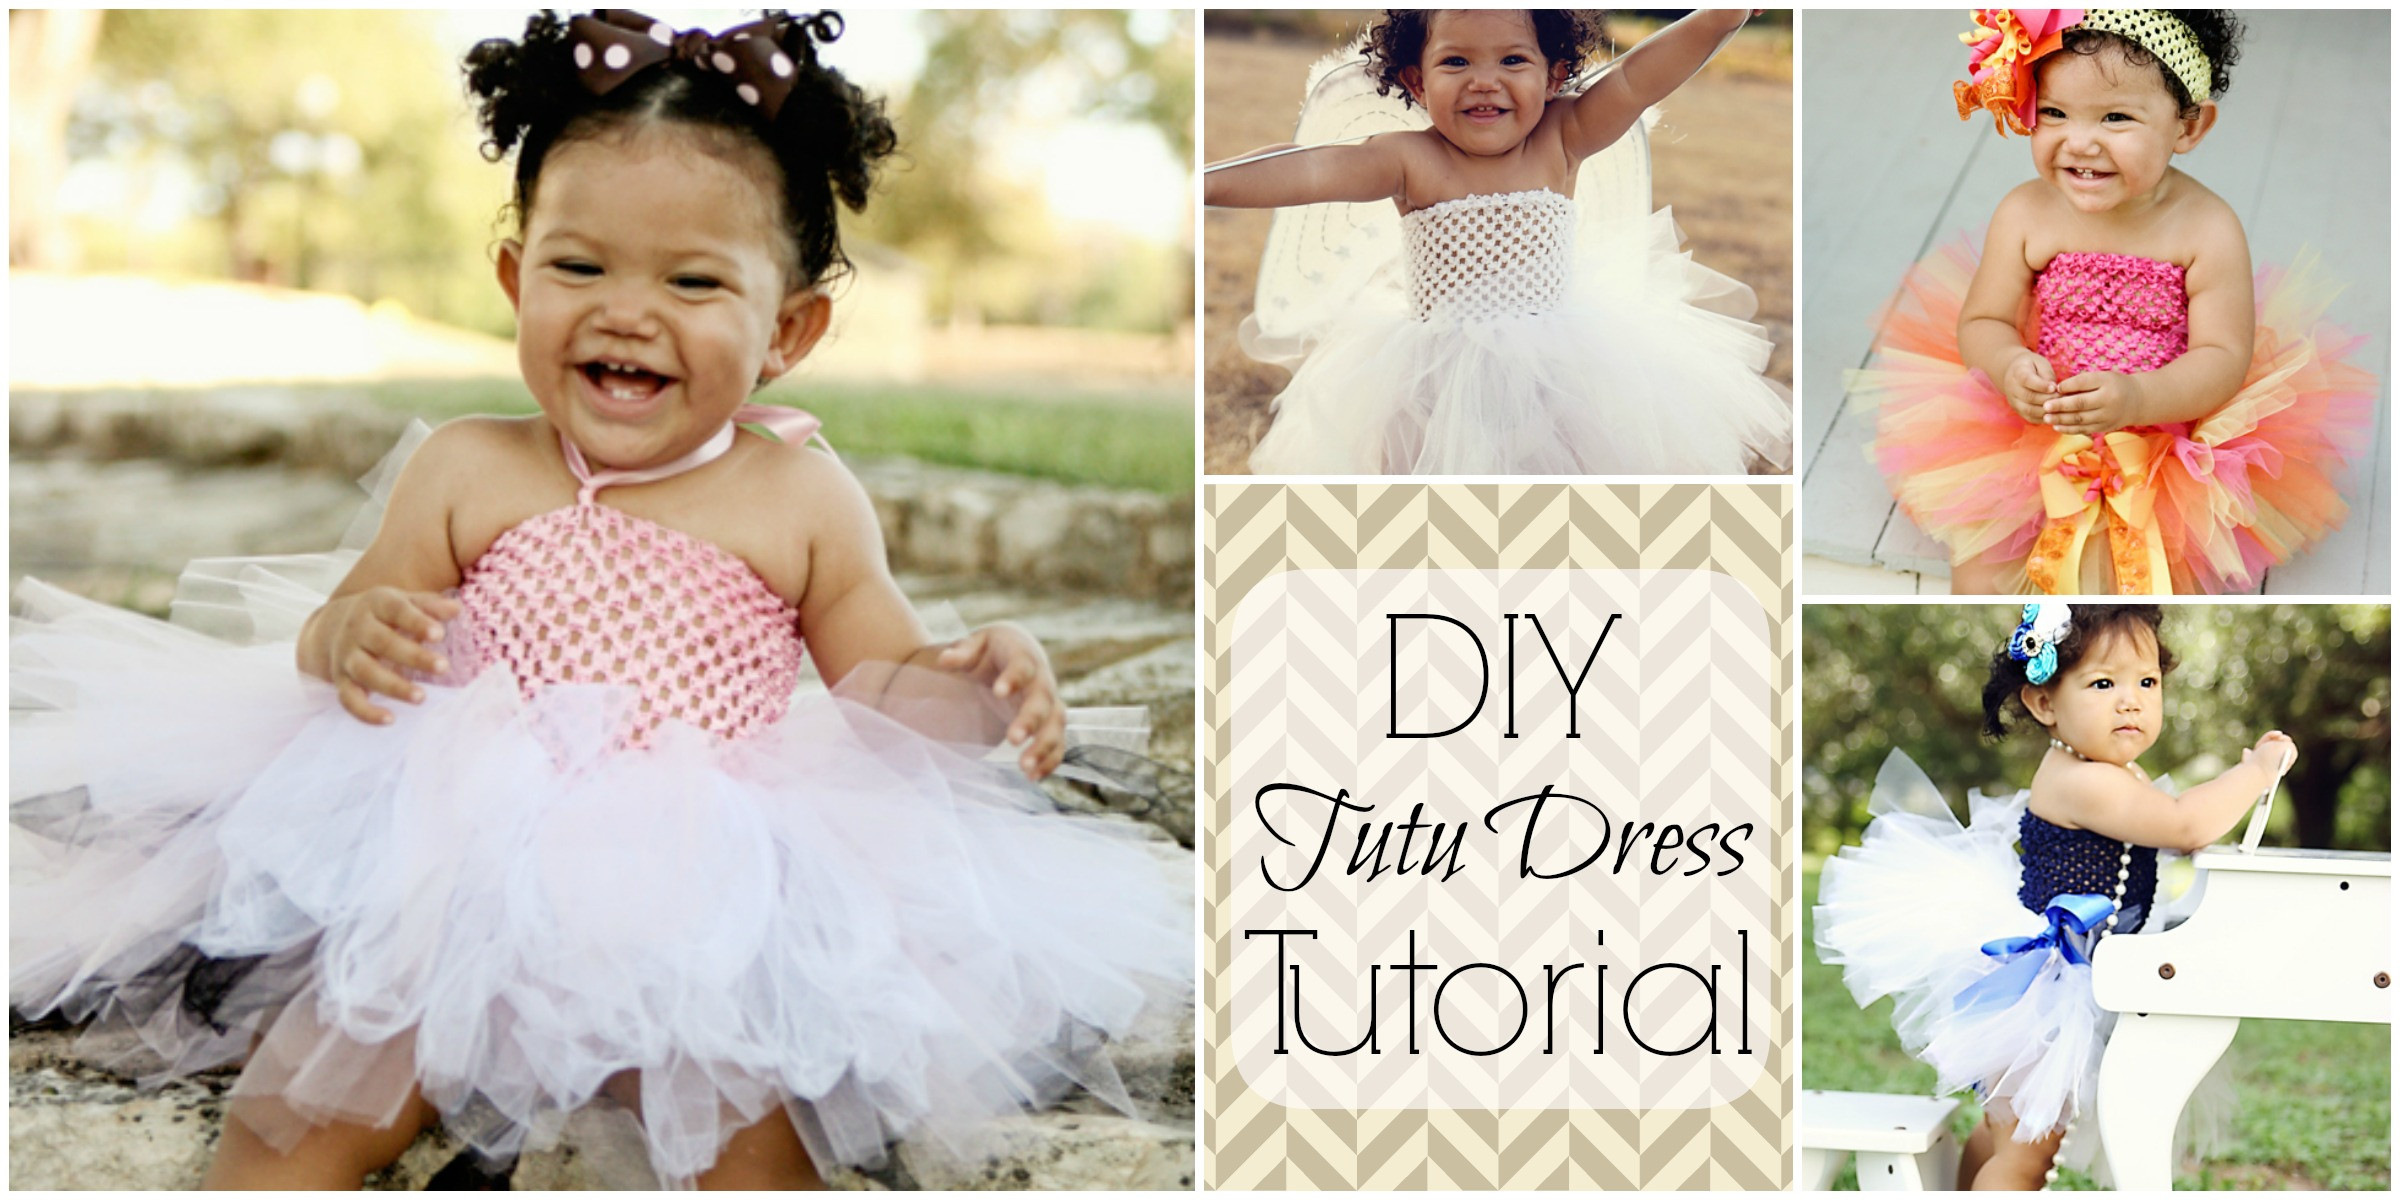 DIY Toddler Tutu
 How to make a tutu dress without sewing